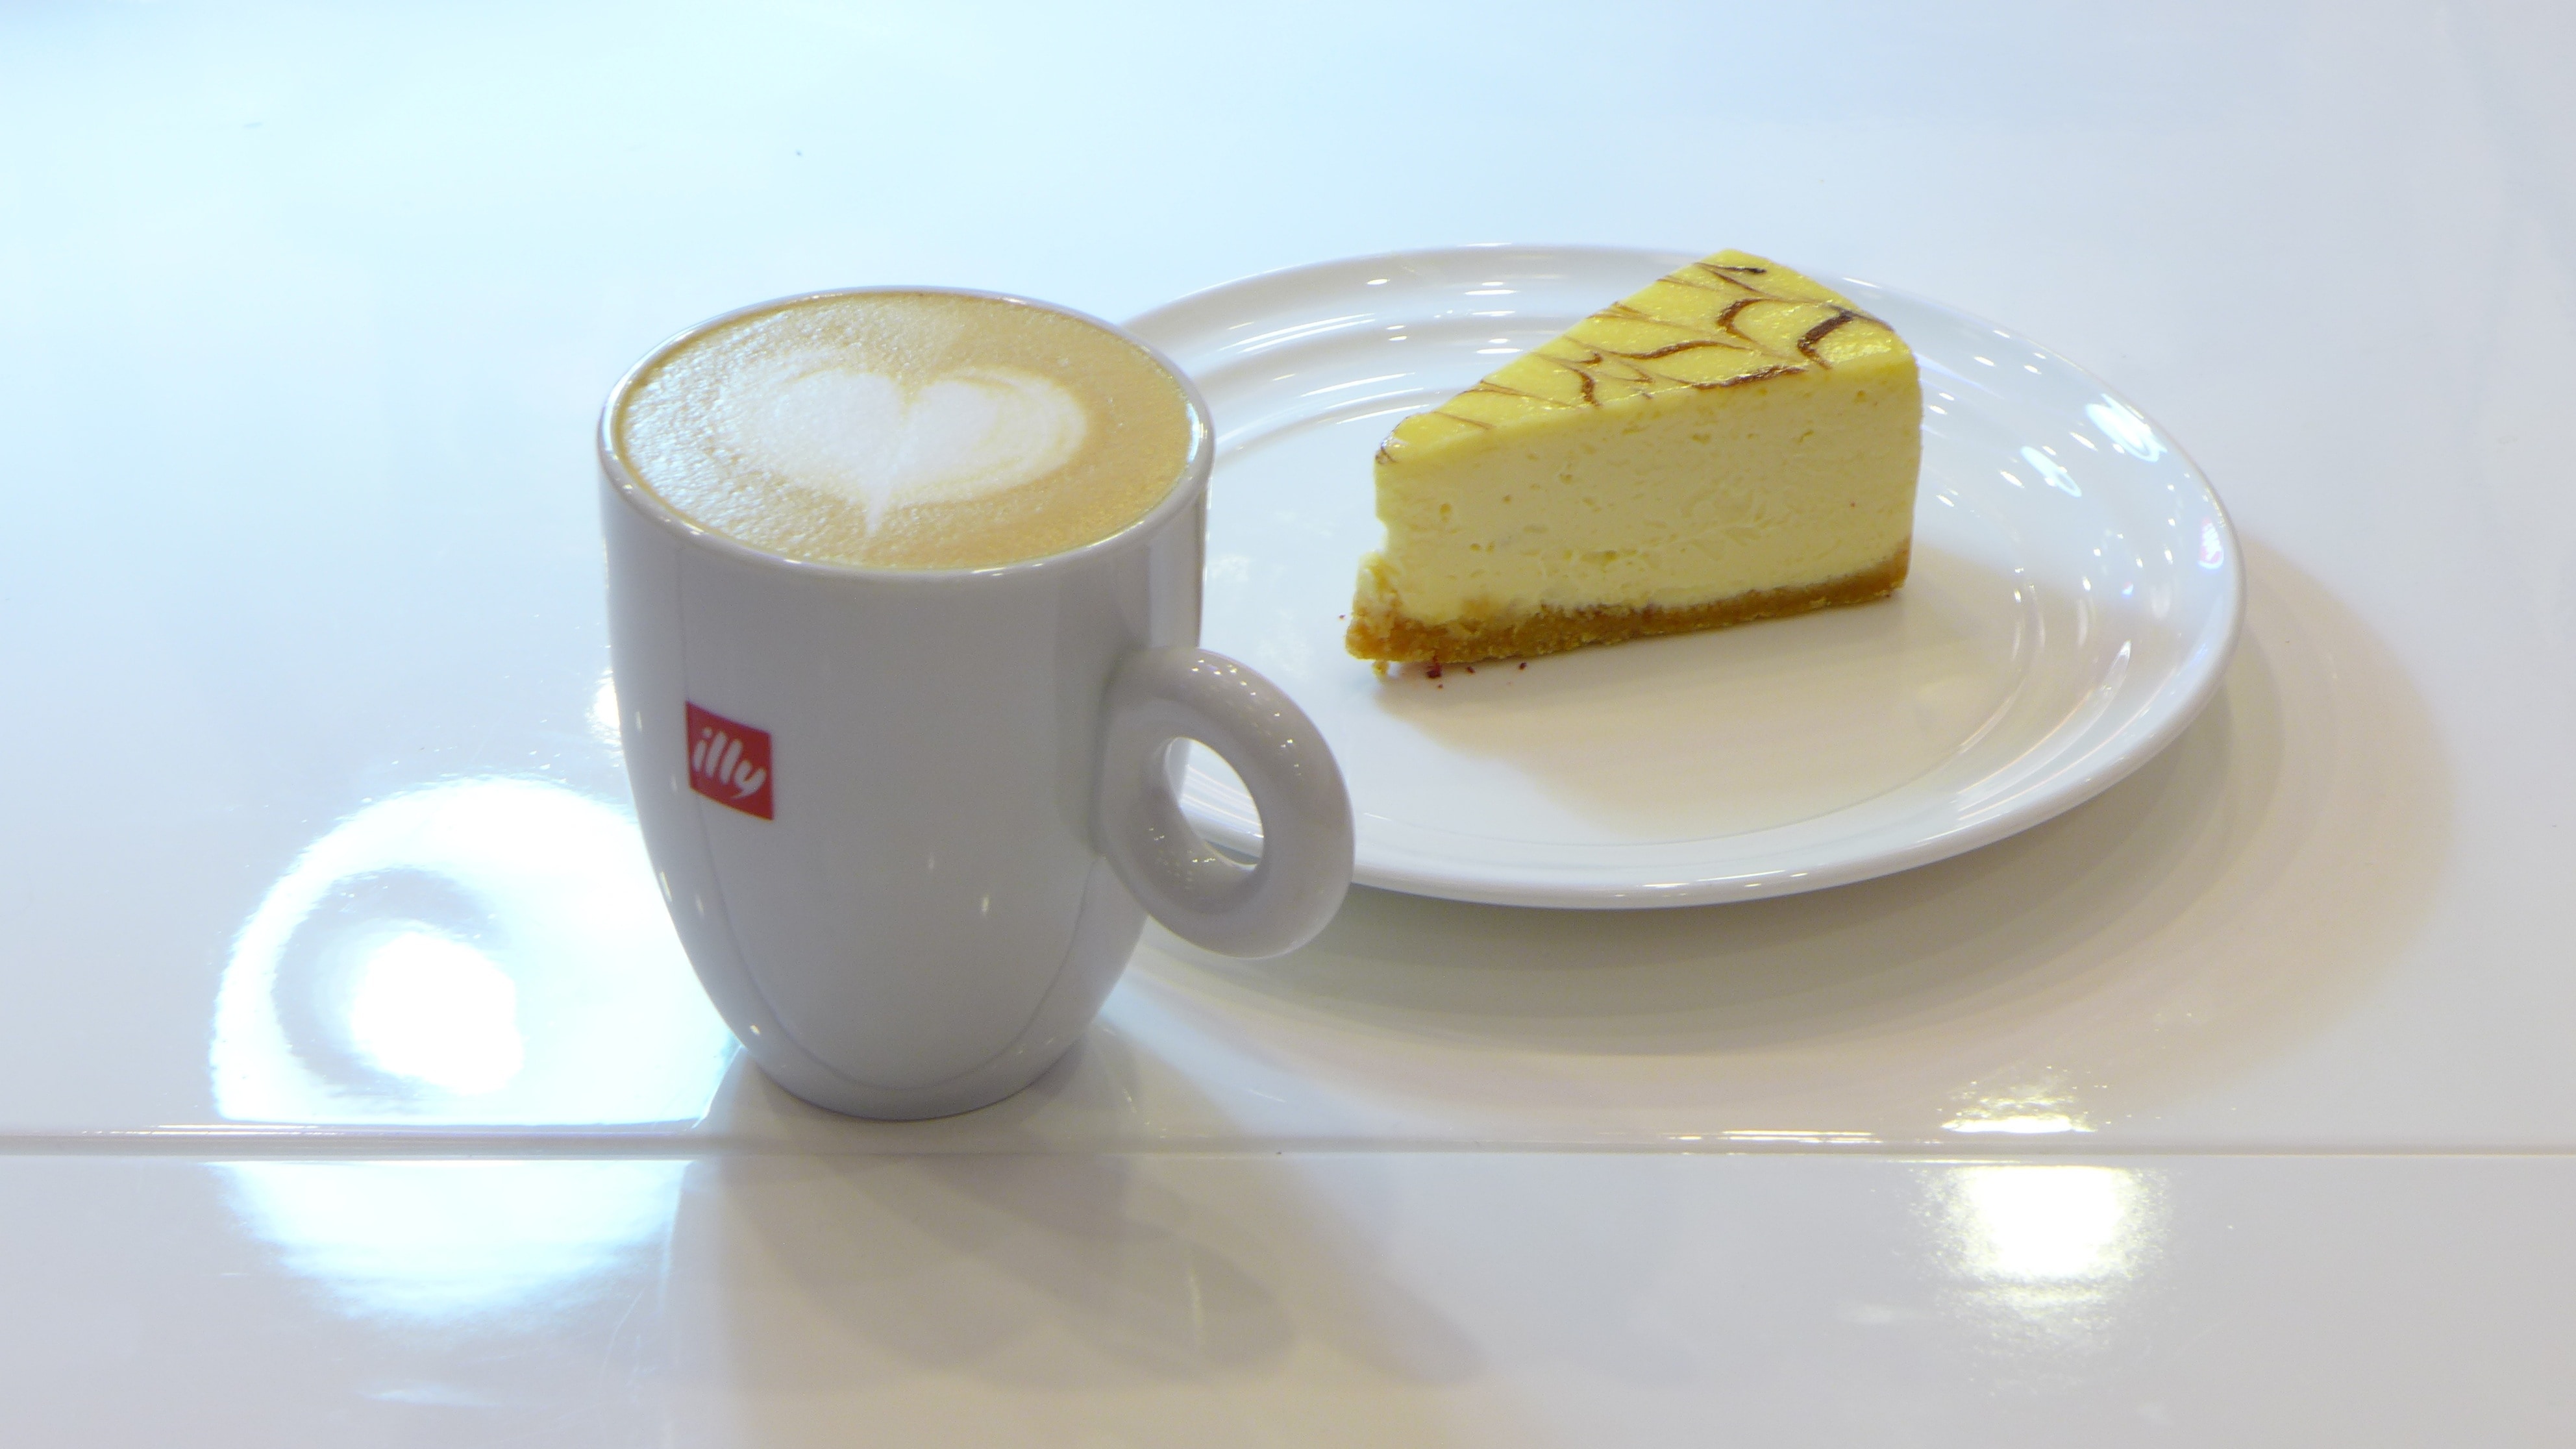 white and yellow sliced cake on white ceramic plate with white ceramic coffee mug